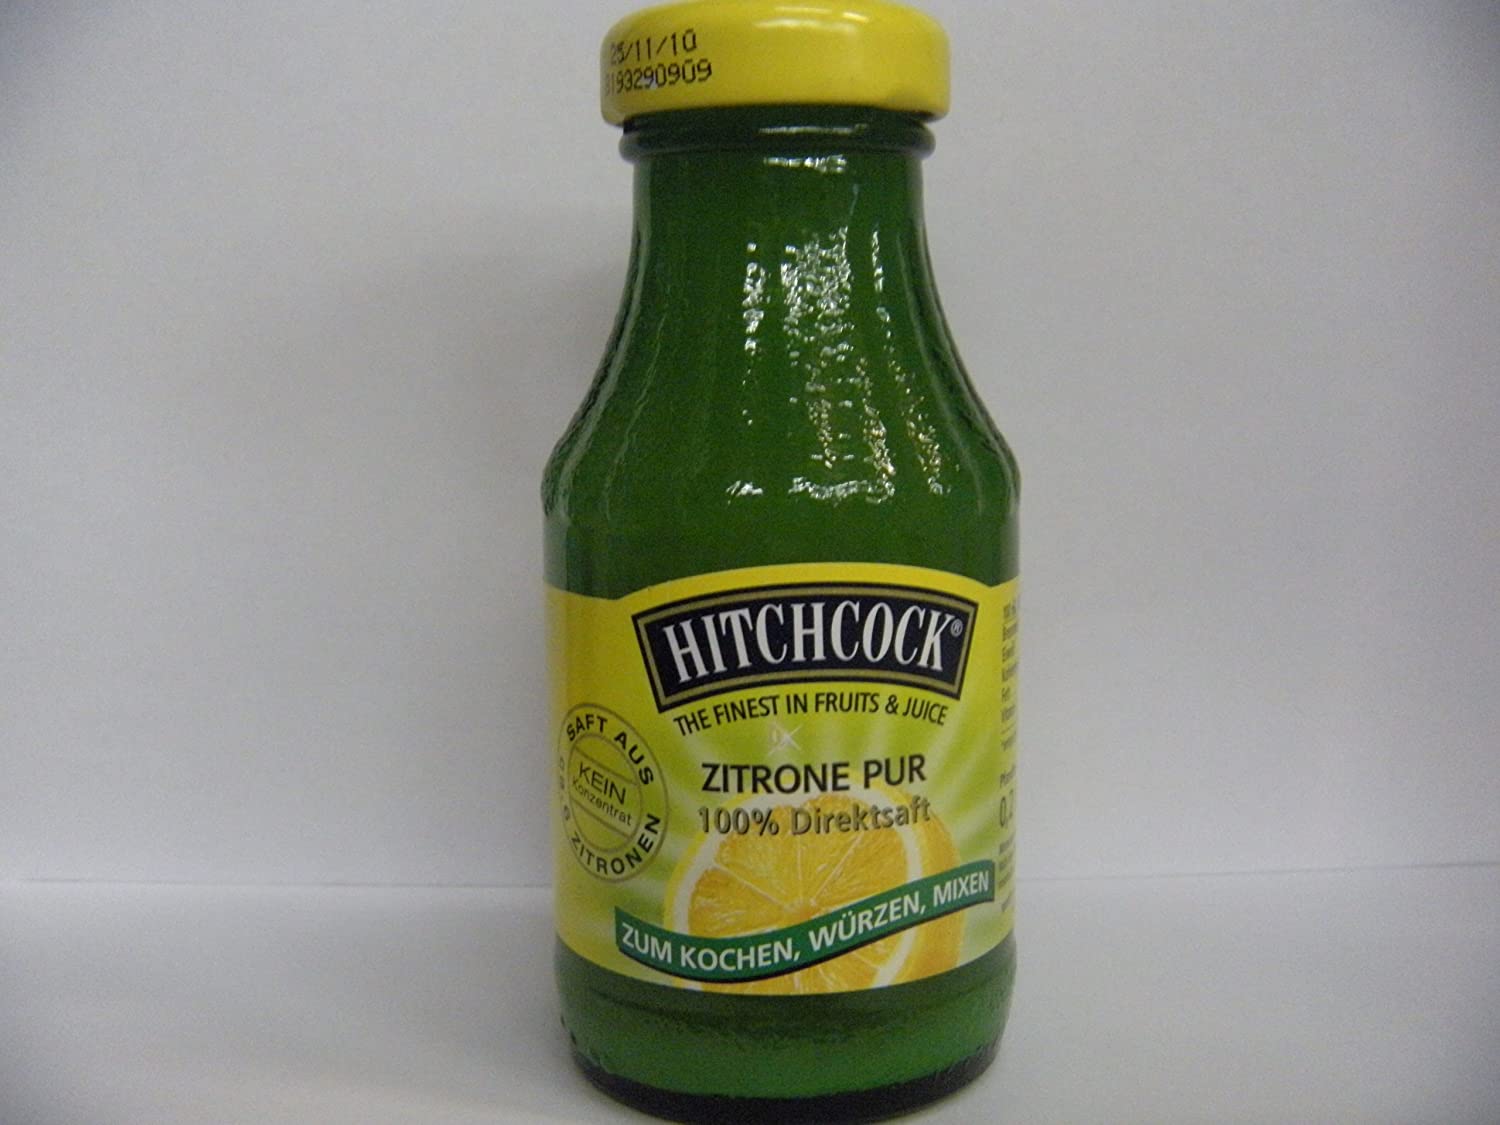 Hitchcock Zitrone Pur, (1 x 200 ml)